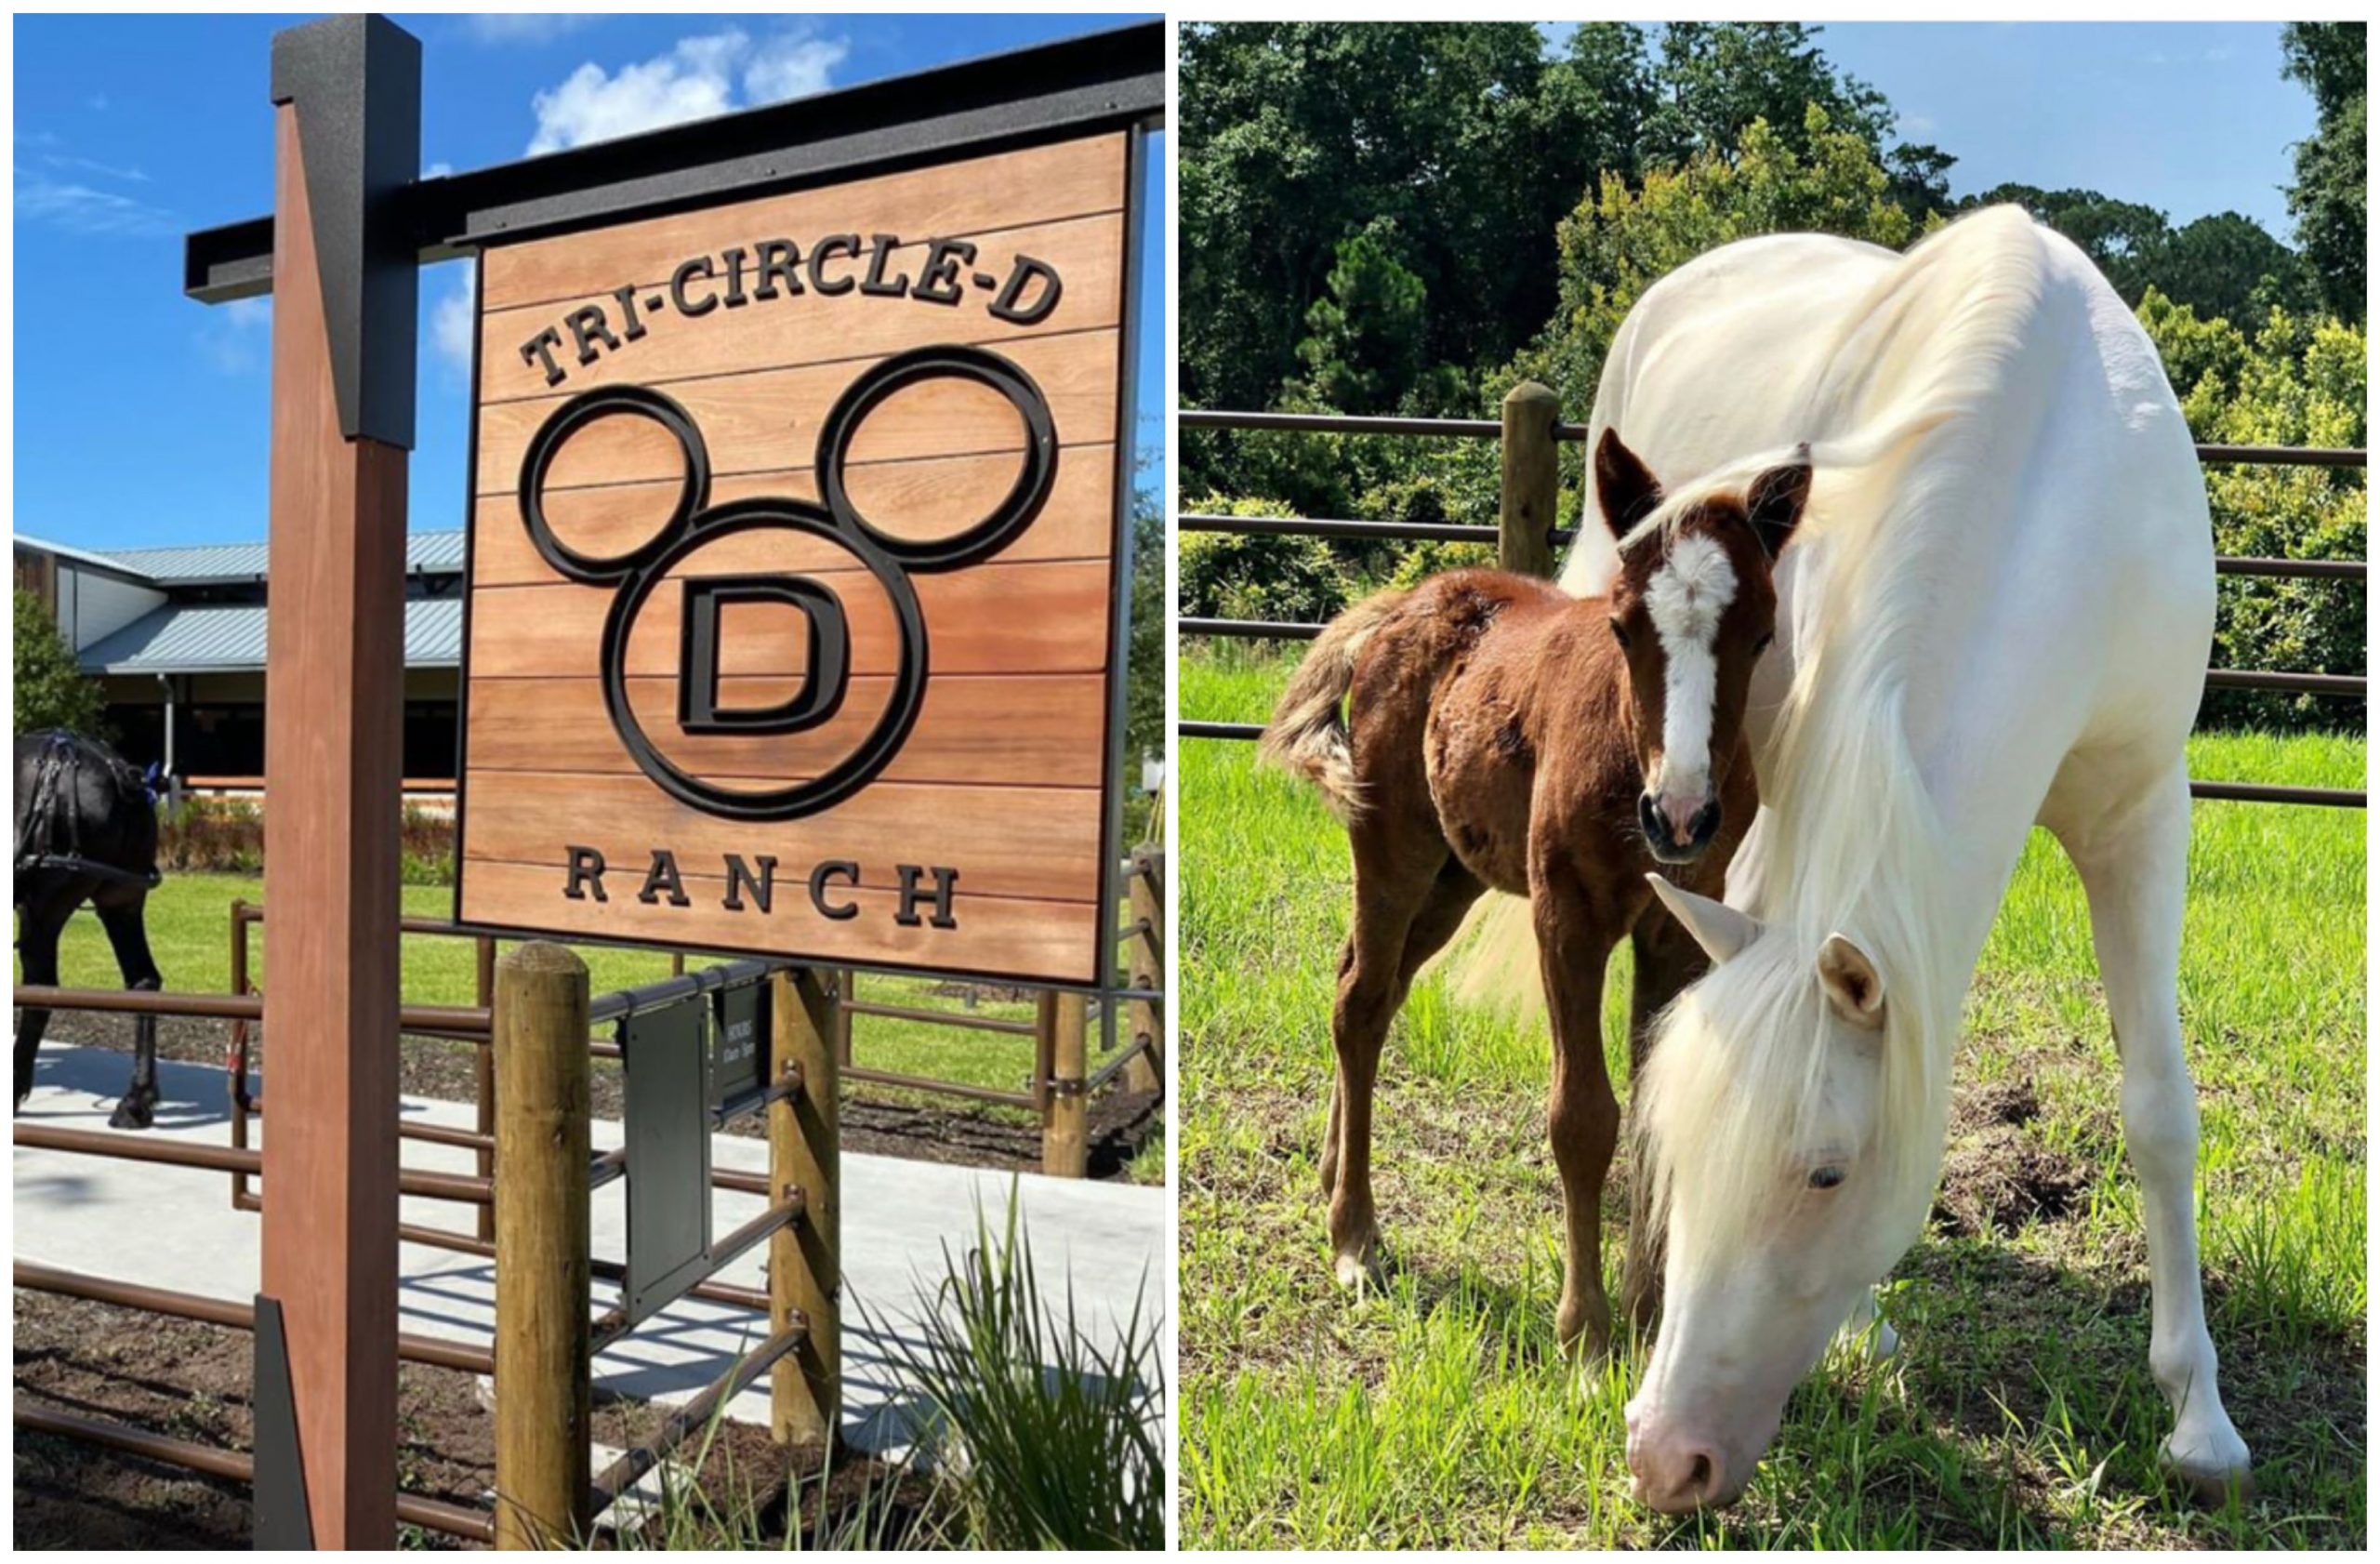 First Foal Born at Disney’s Tri-Circle D Ranch!